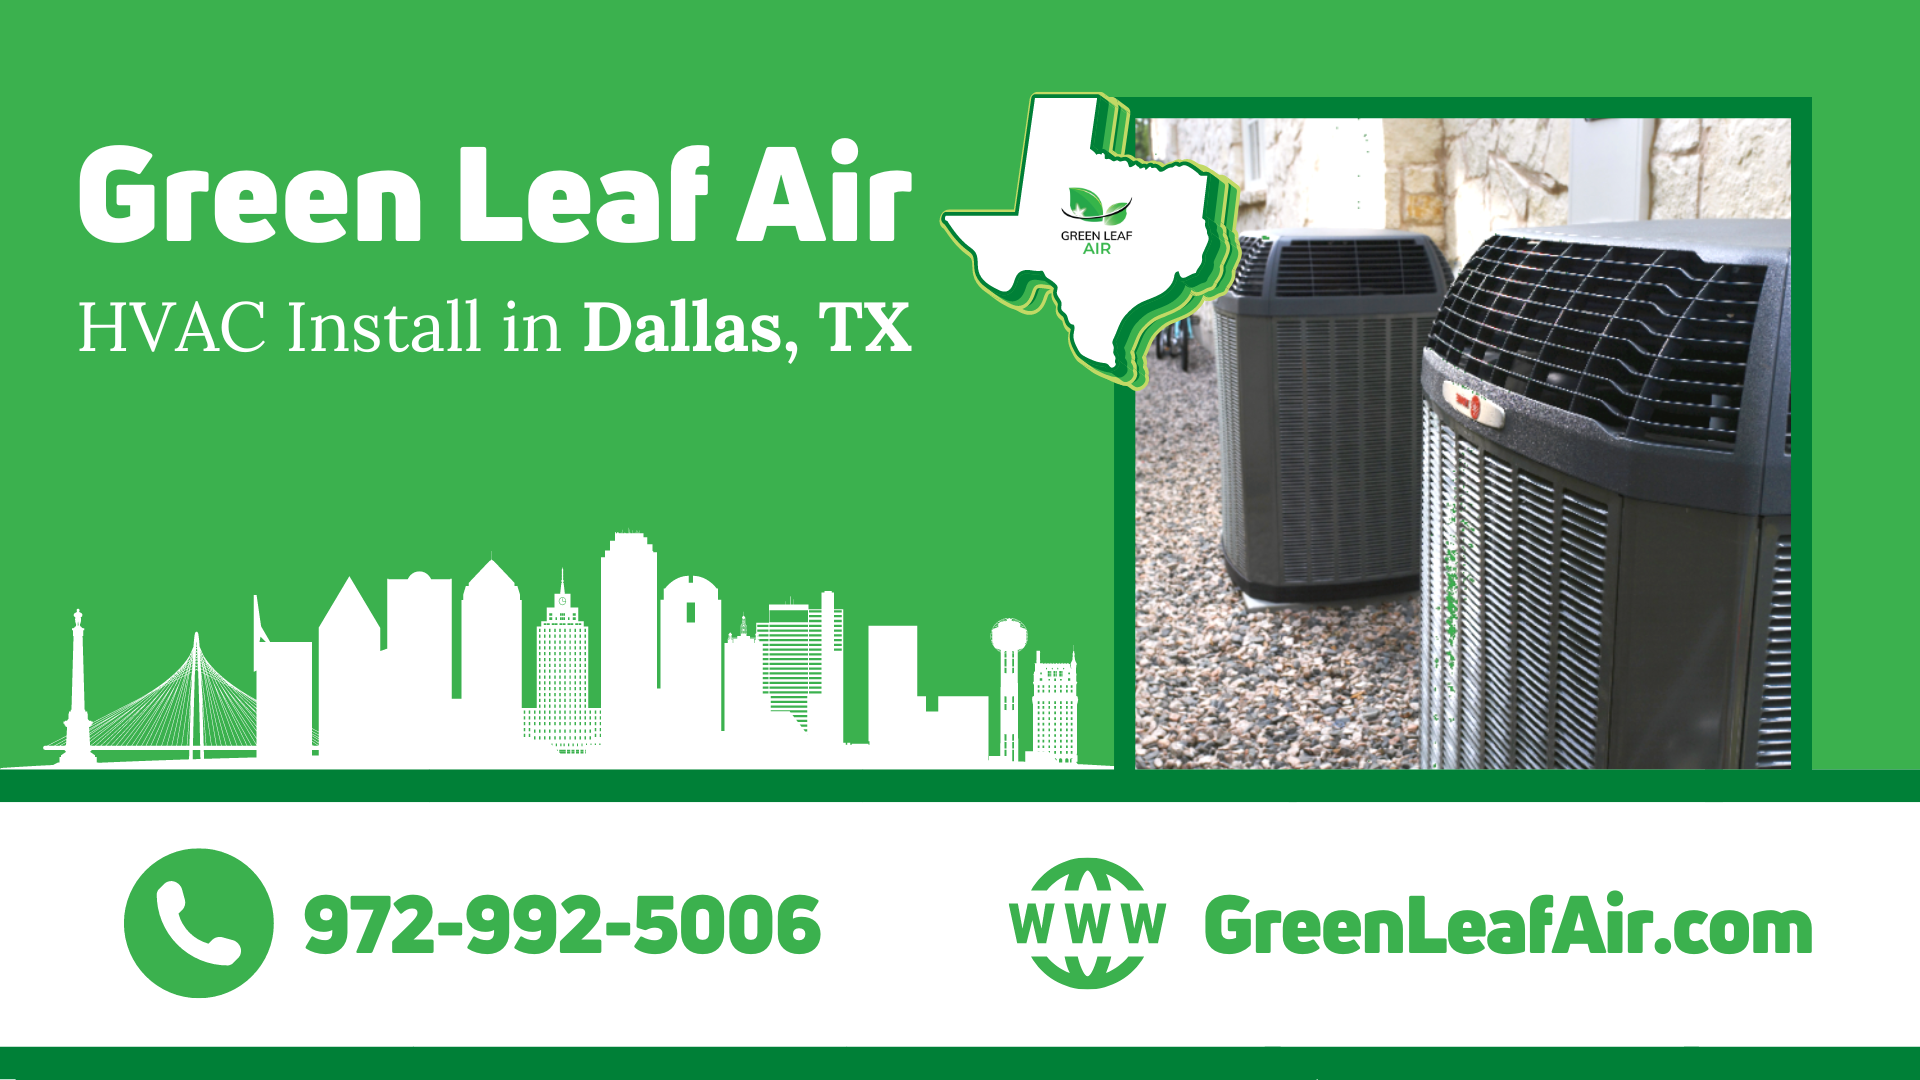 Green Leaf Air — HVAC Install in Dallas, Texas